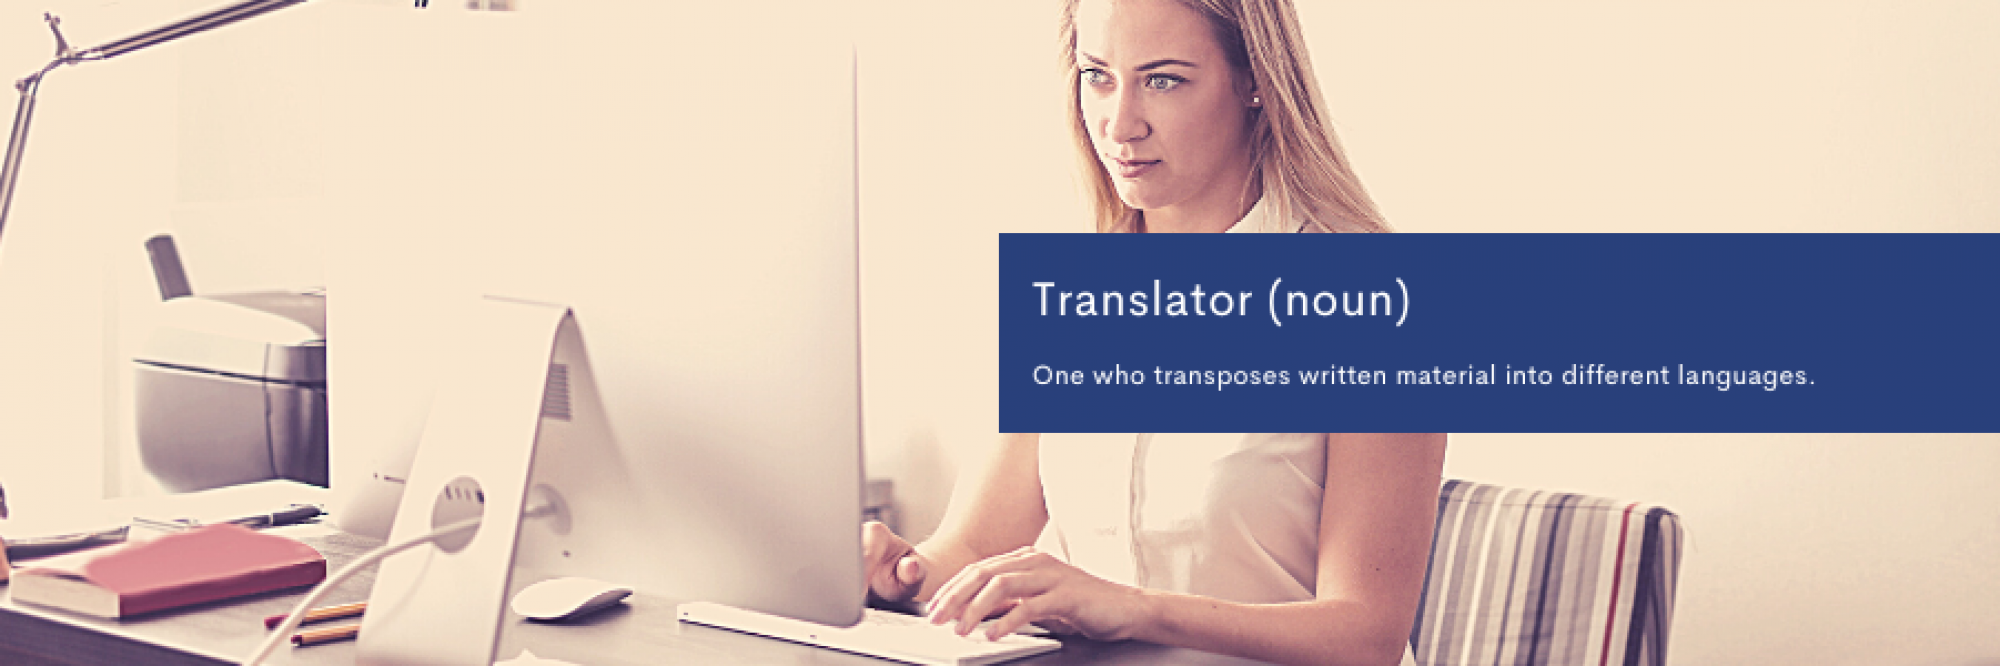 ATIS - The Association of Translators & Interpreters of Saskatchewan